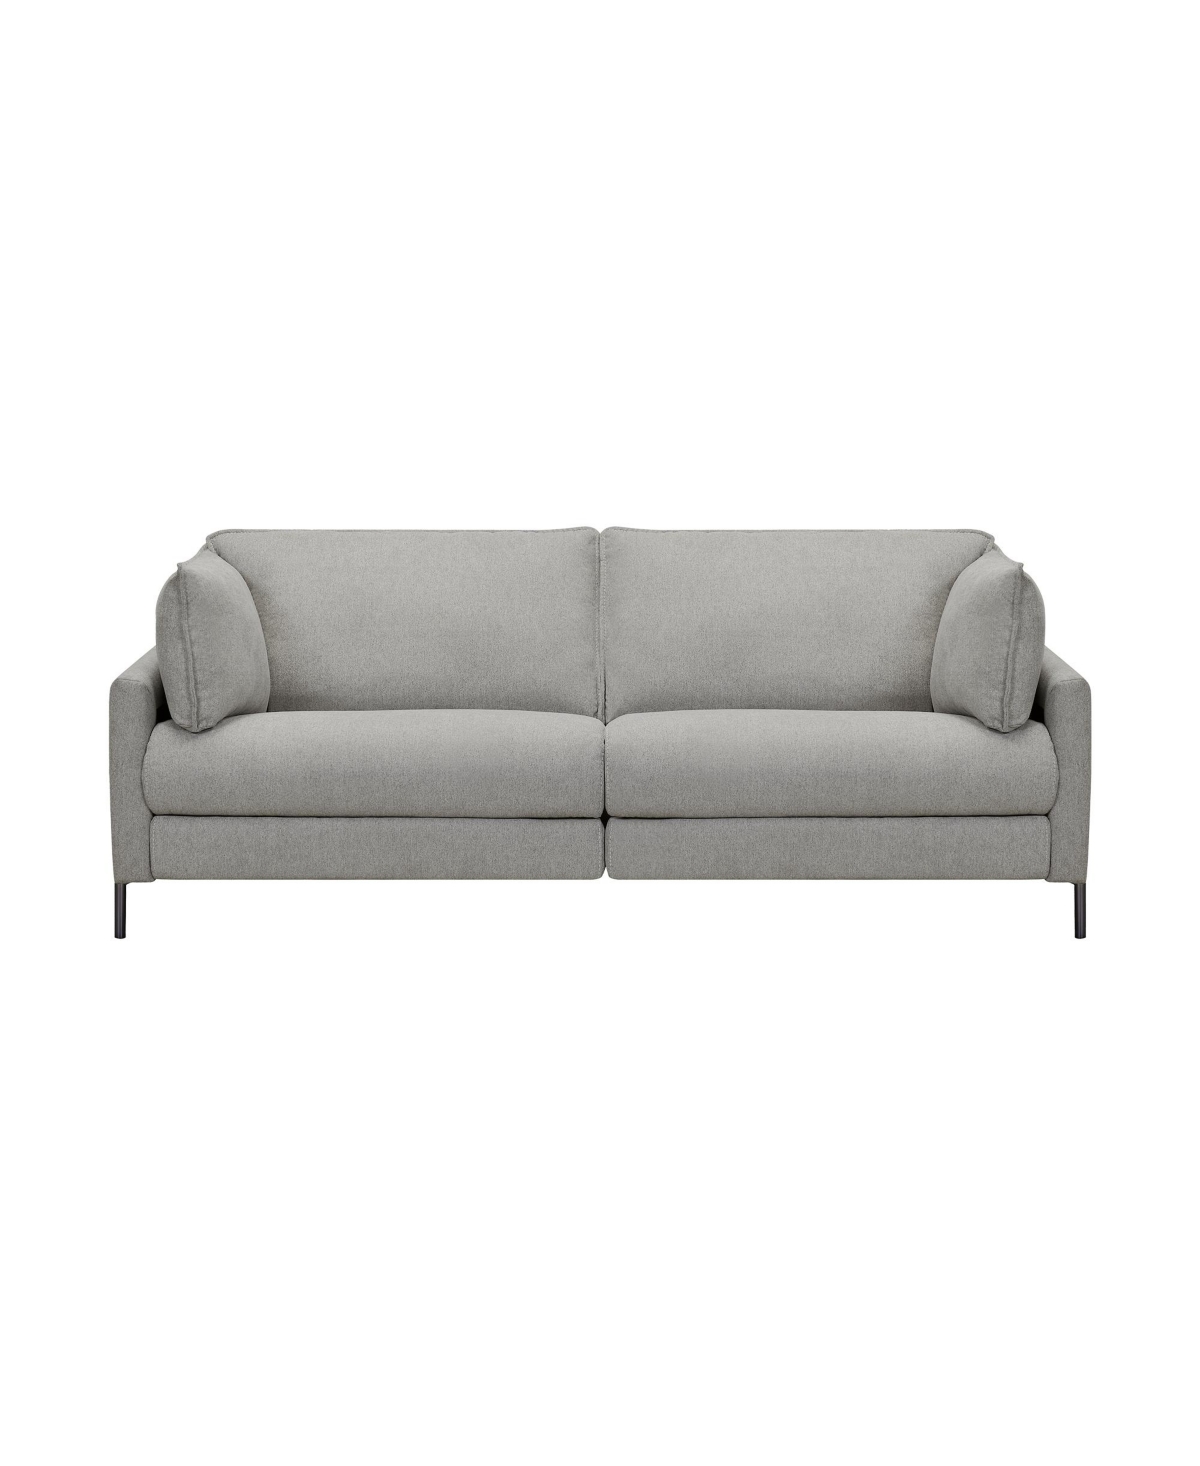 Armen Living Juliett 80" Fabric With Power Footrest Modern Sofa In Gray Pebble